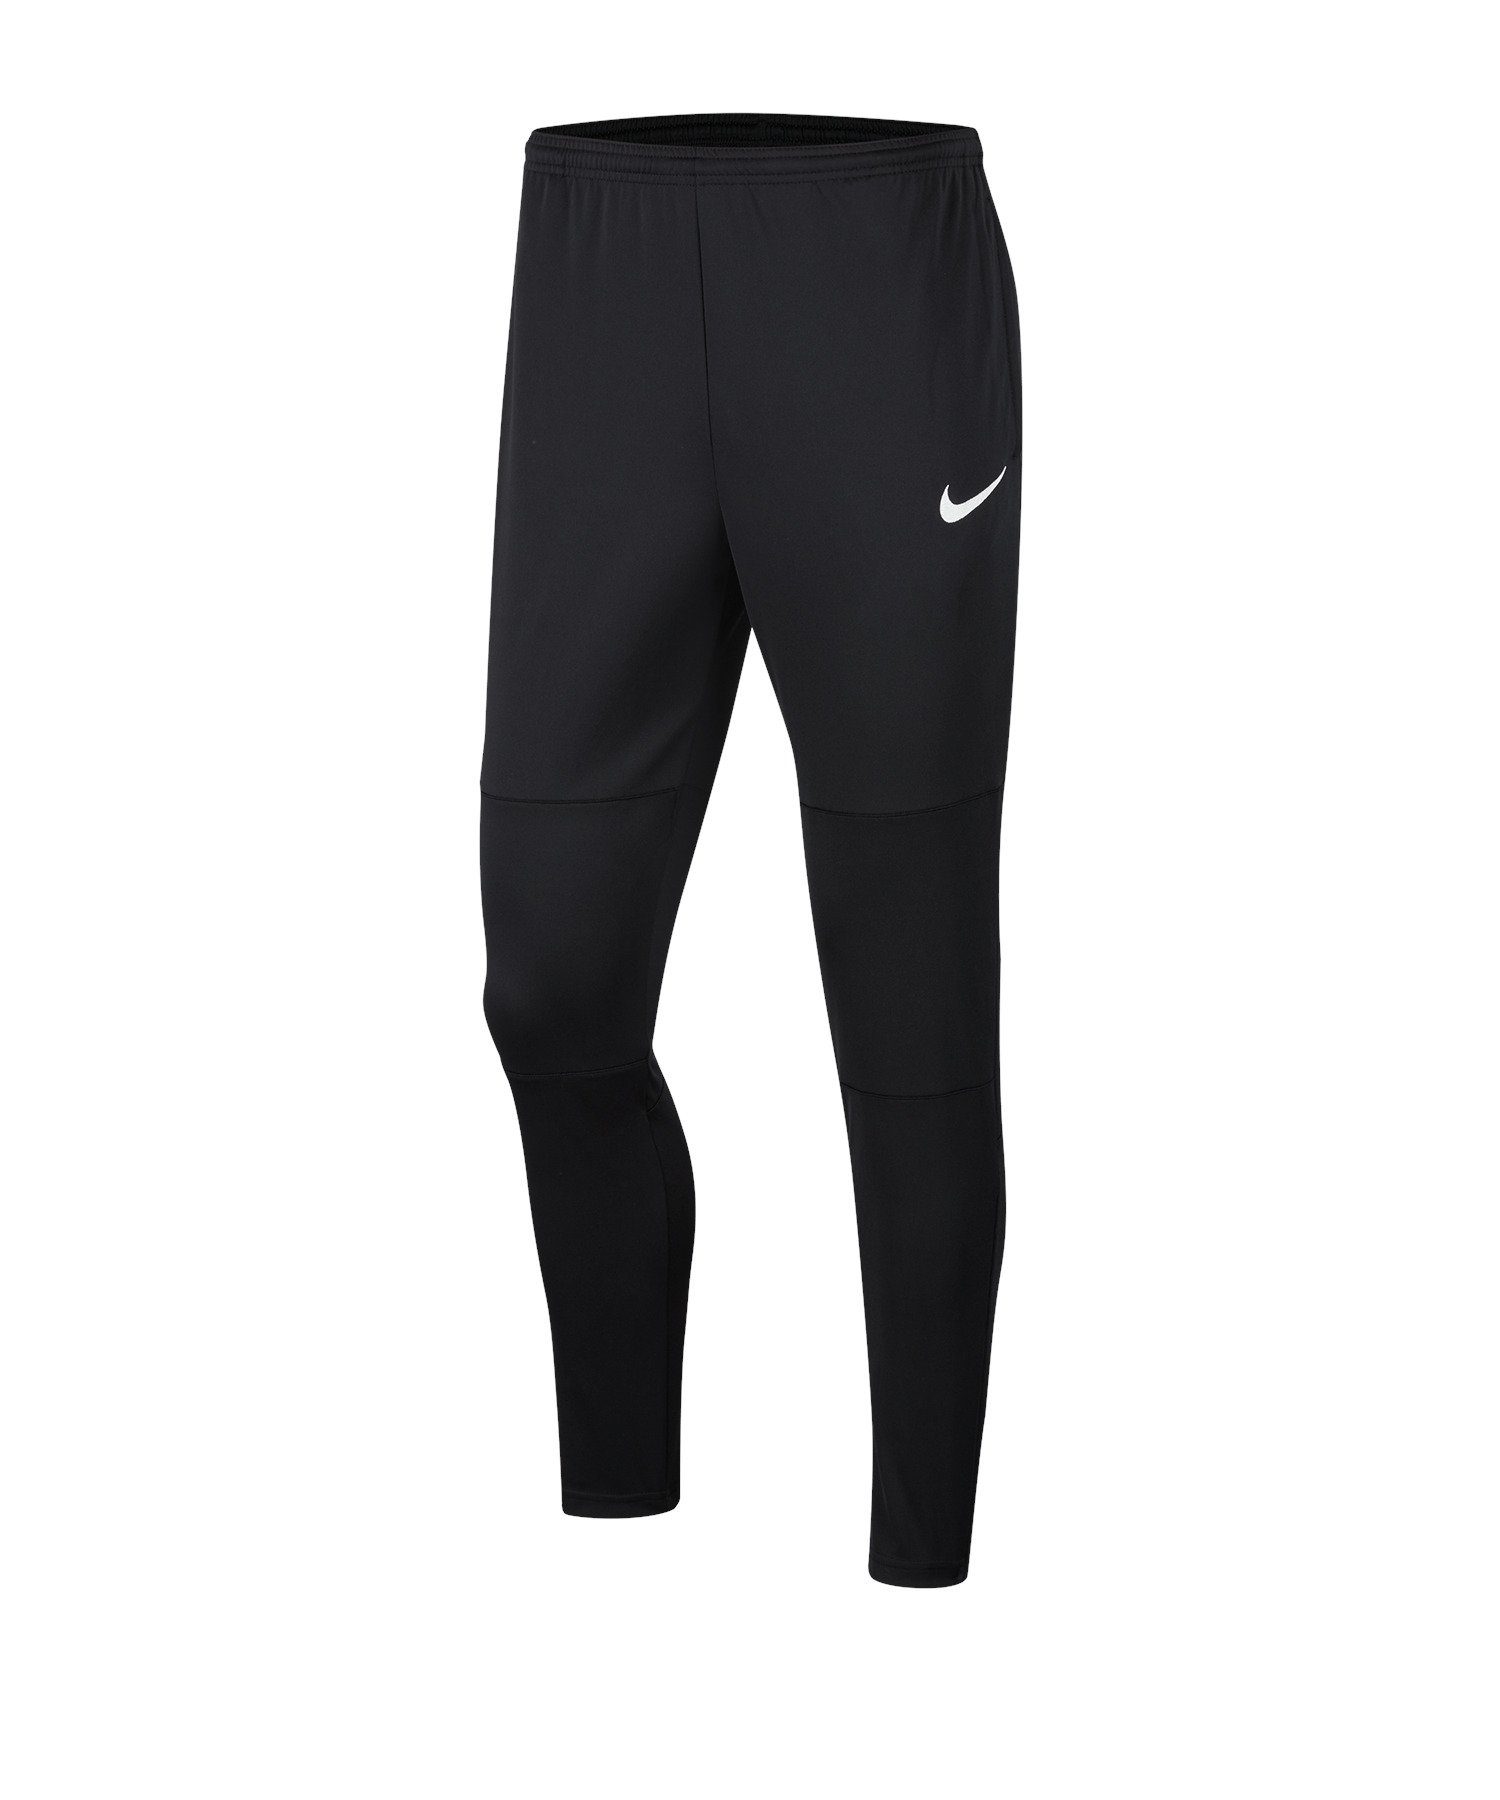 Nike Sporthose Park Training 20 K Hose schwarzweiss Pant